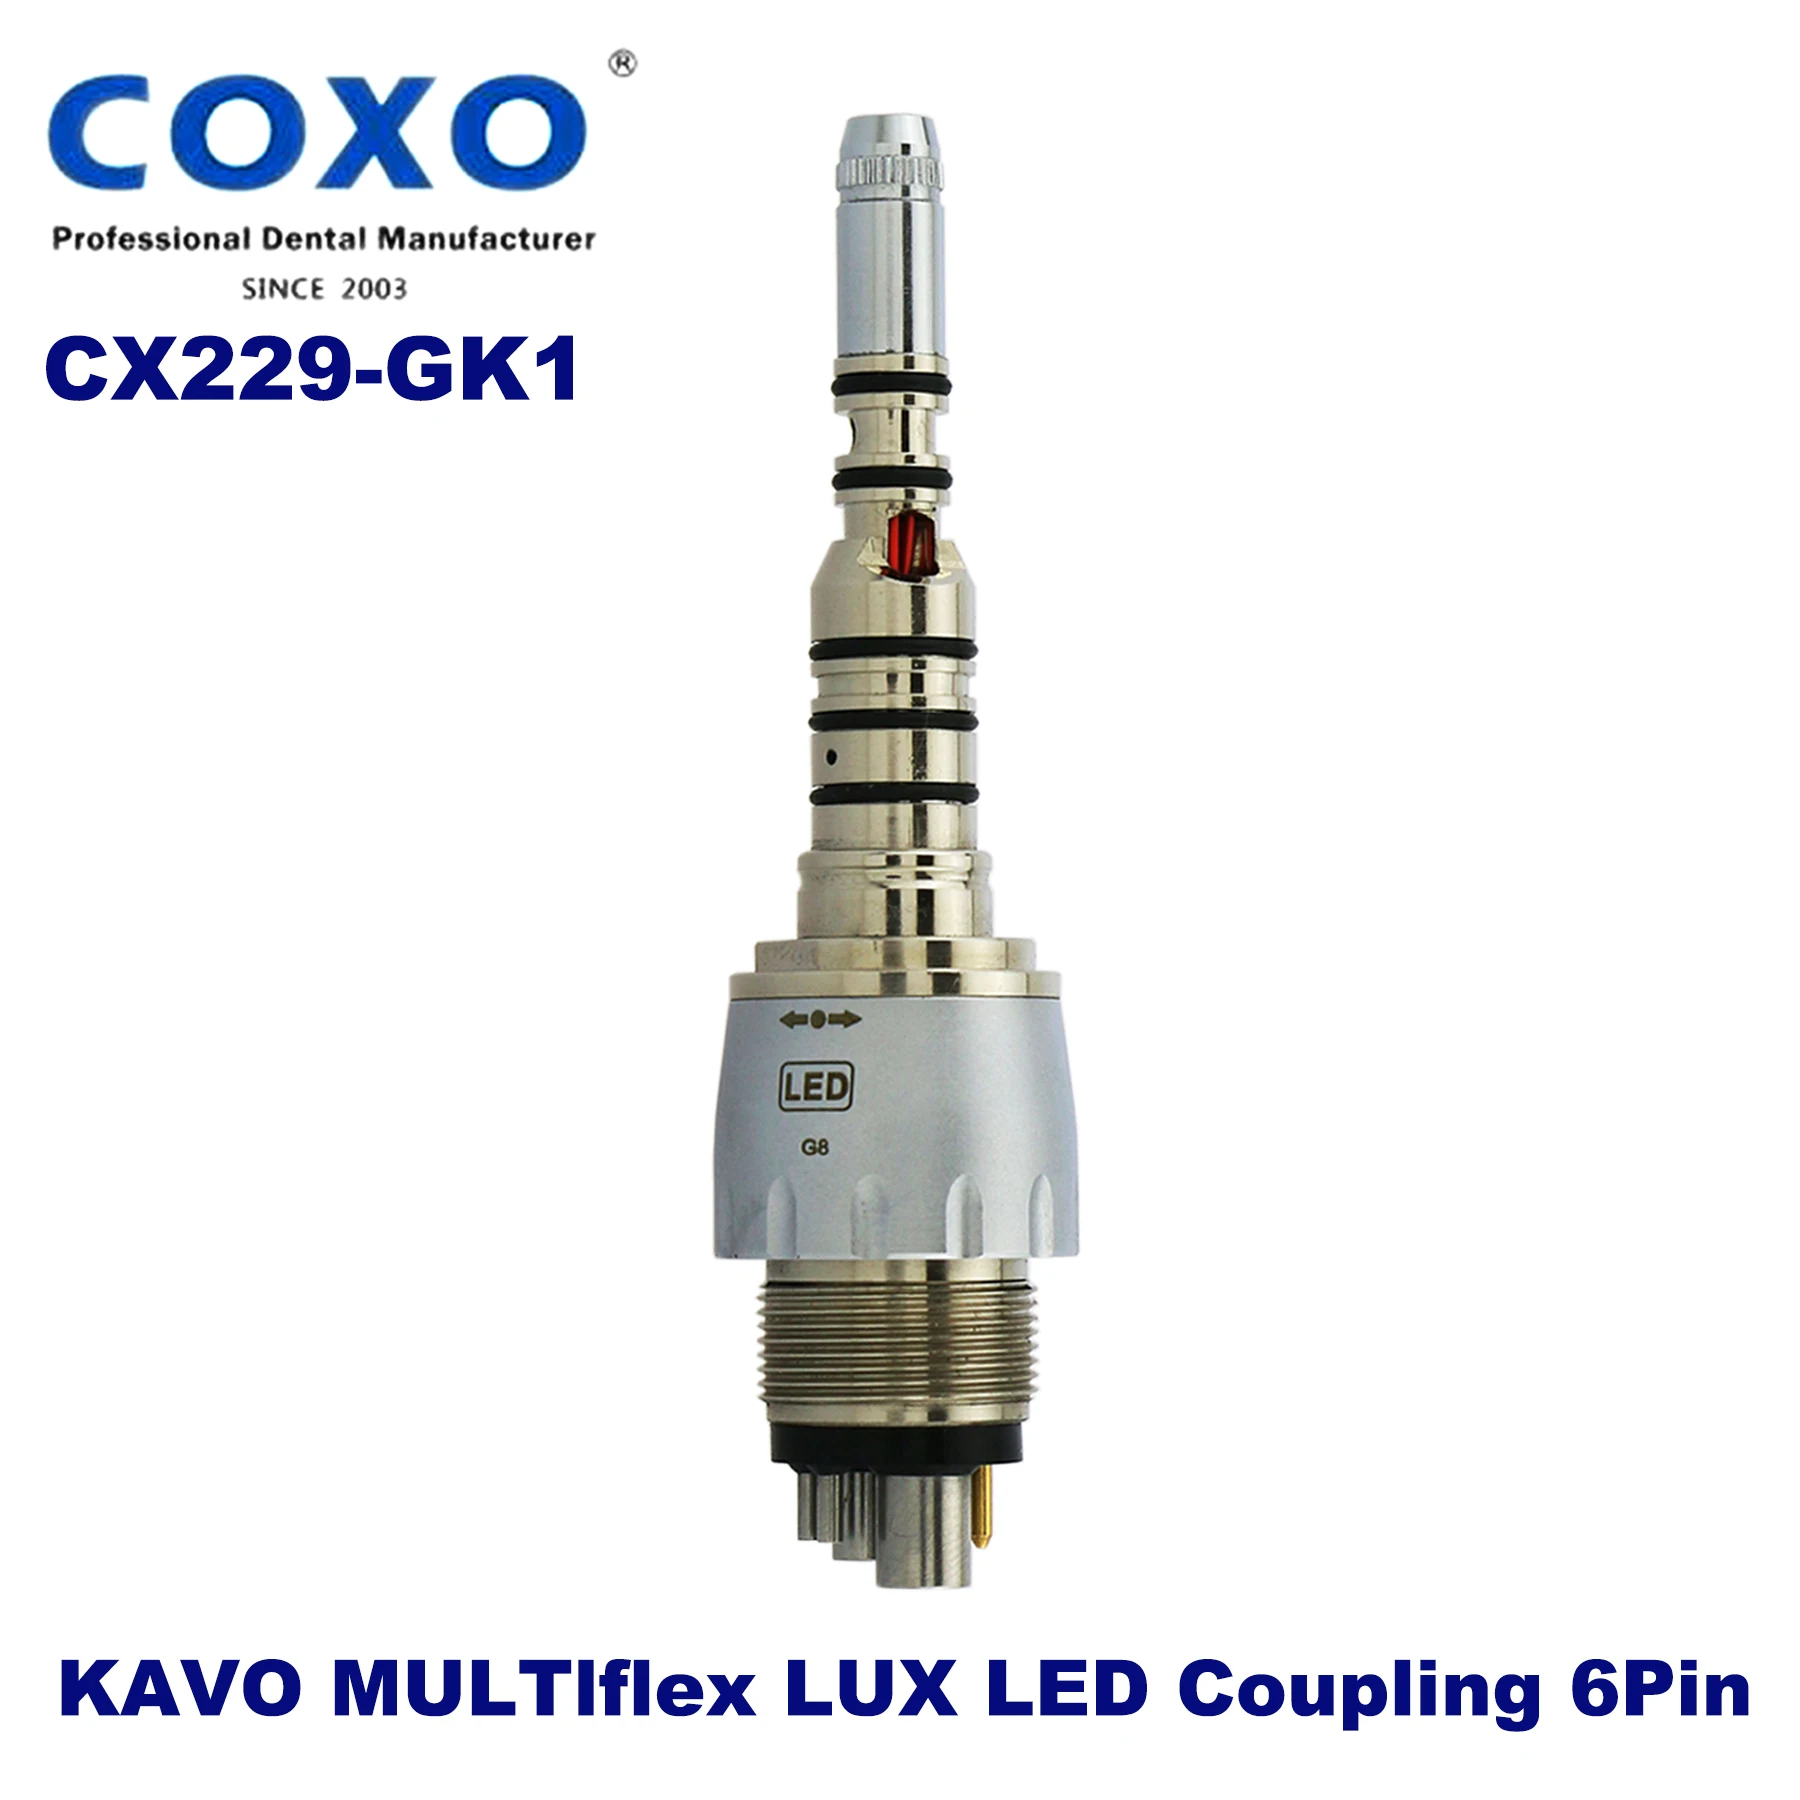 COXO KAVO Multiflex LUX Type Dental LED Coupler Coupling 6Pin 6Holes CX229-GK1 For LED Fiber Optic High Speed Turbine Handpiece